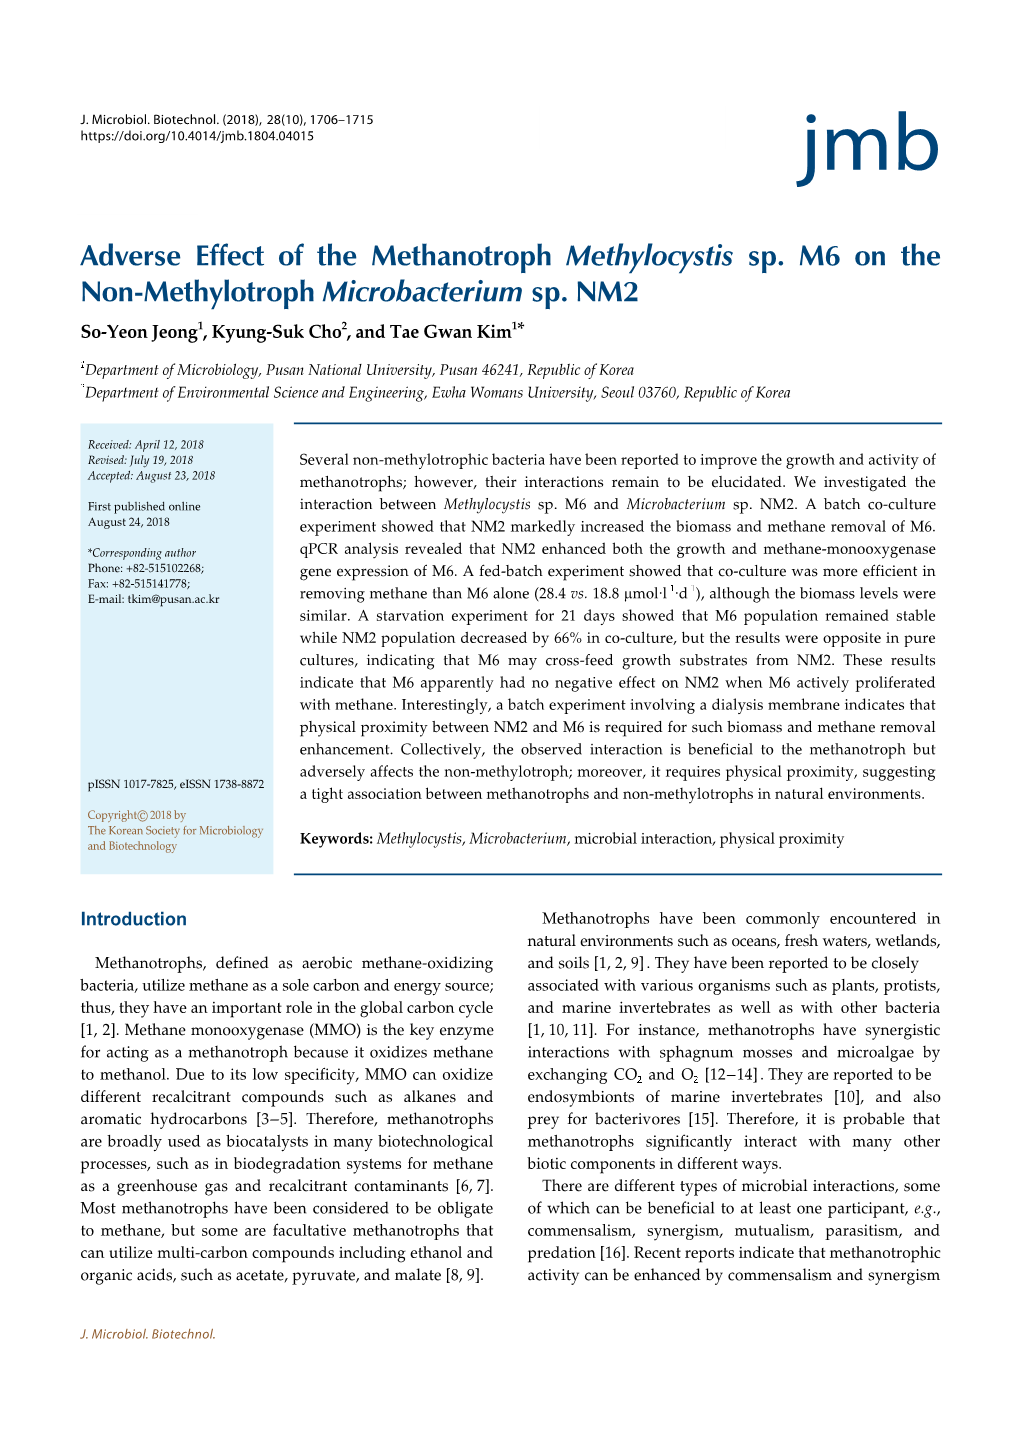 Adverse Effect of the Methanotroph Methylocystis Sp. M6 on the Non-Methylotroph Microbacterium Sp